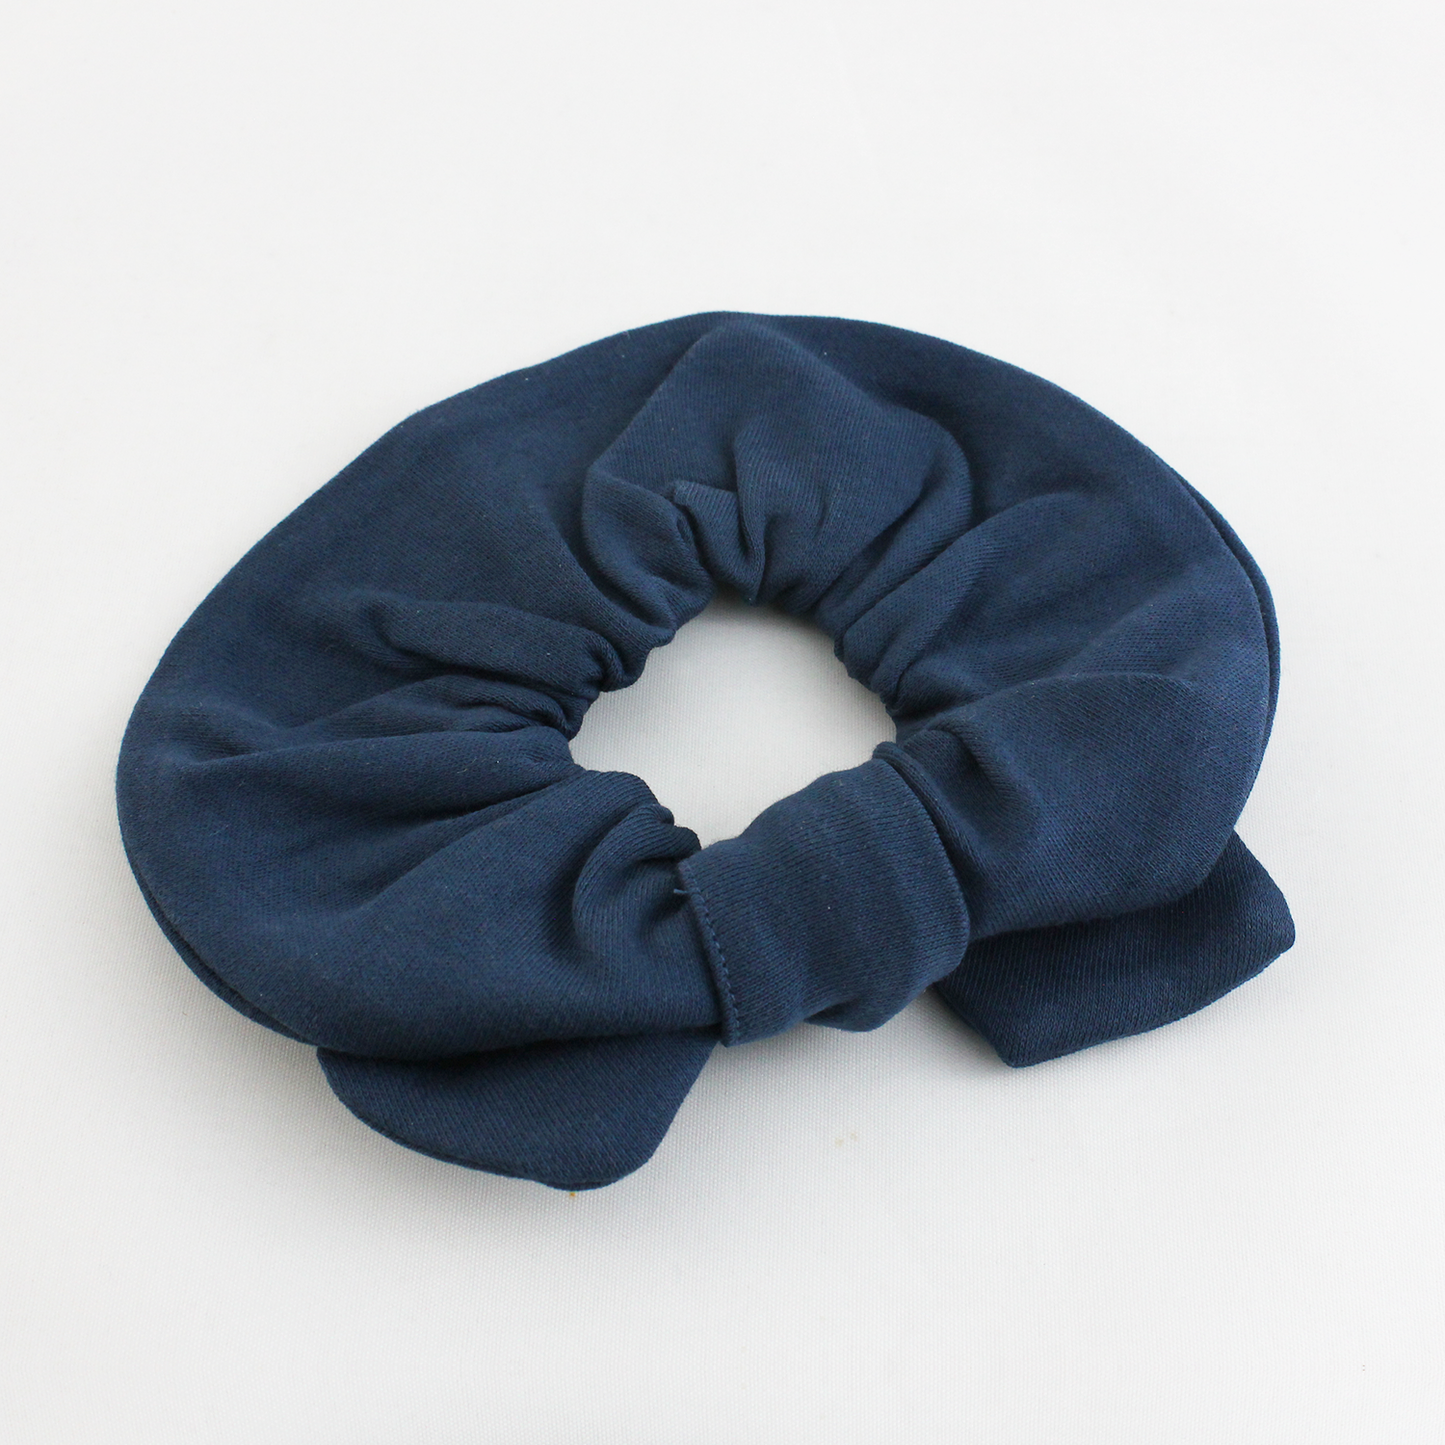 Endanzoo Organic Cotton Scrunchies - Navy Blue